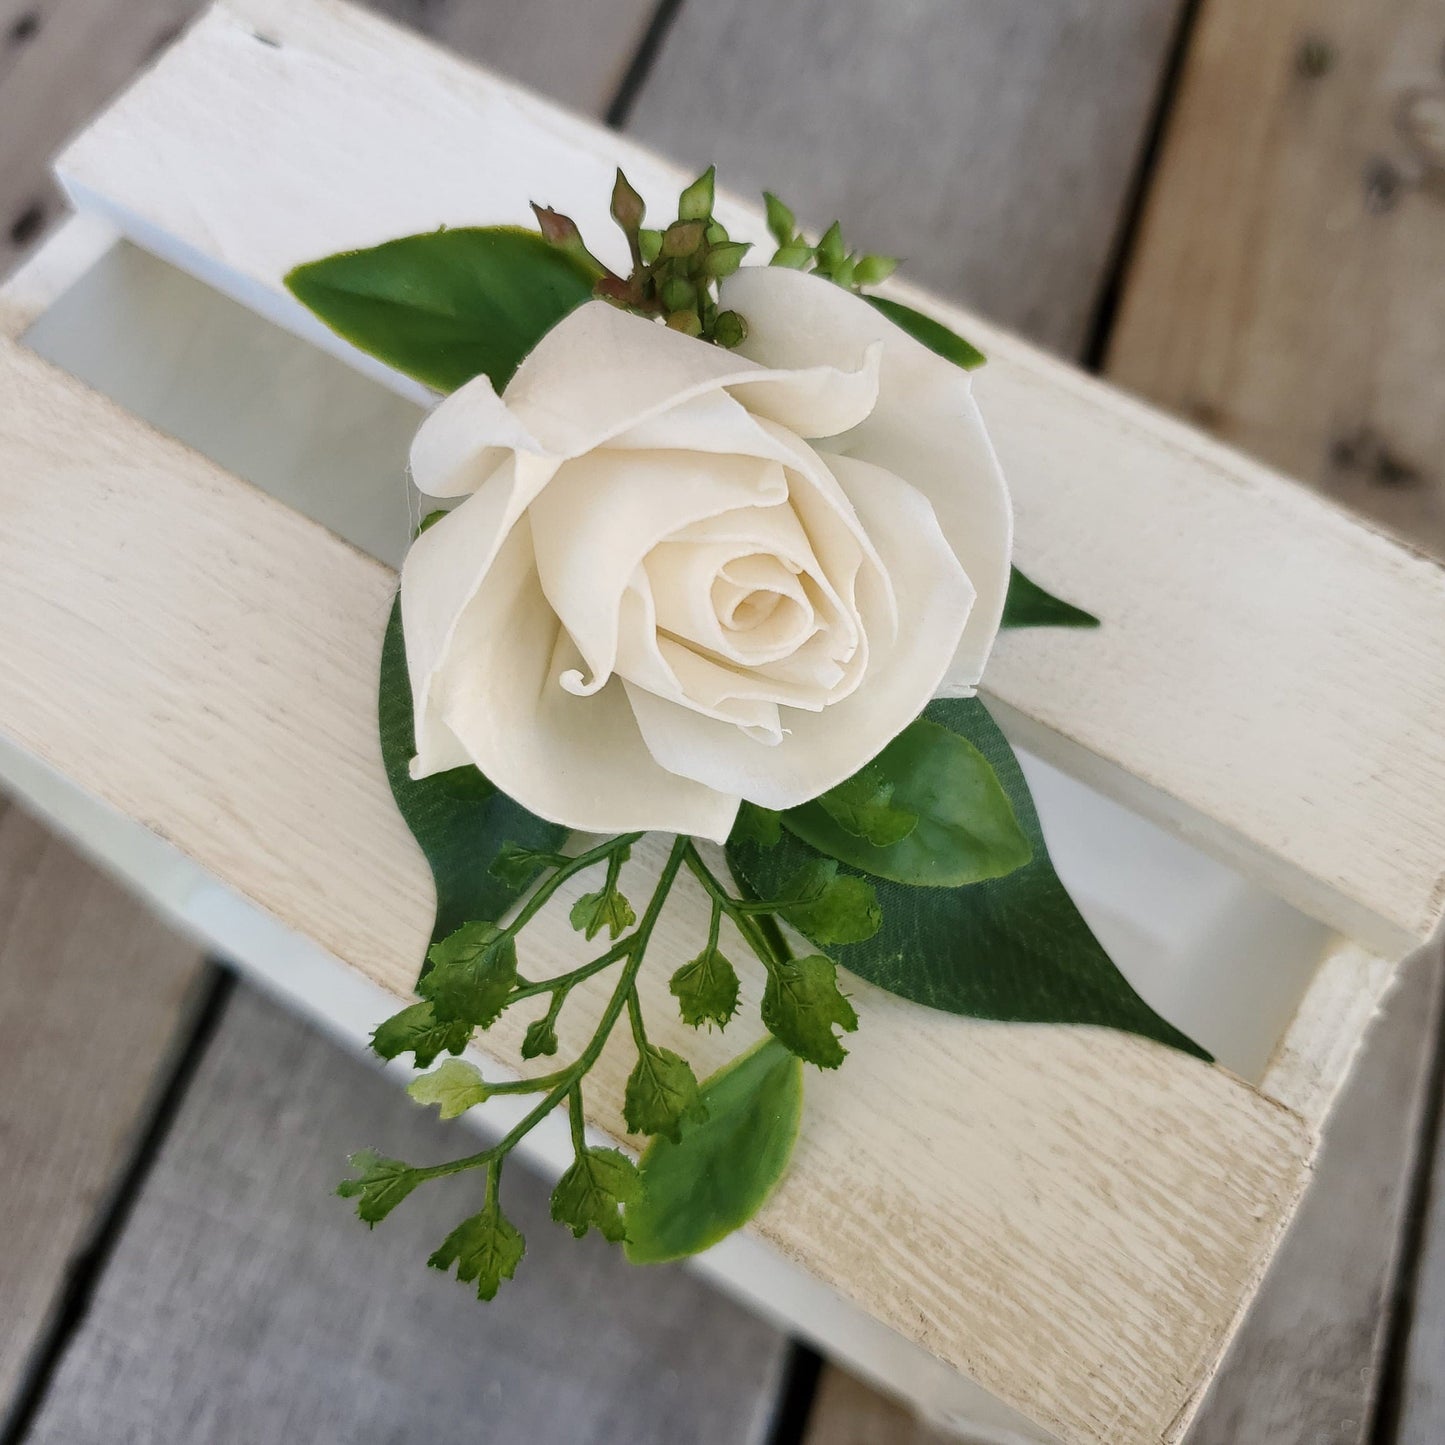 Wood Flower Boutonniere for Groom, Lapel Pin for Groom and Groomsmen, Groom flower, Wooden Flower for Jacket, Guy Wedding Flowers